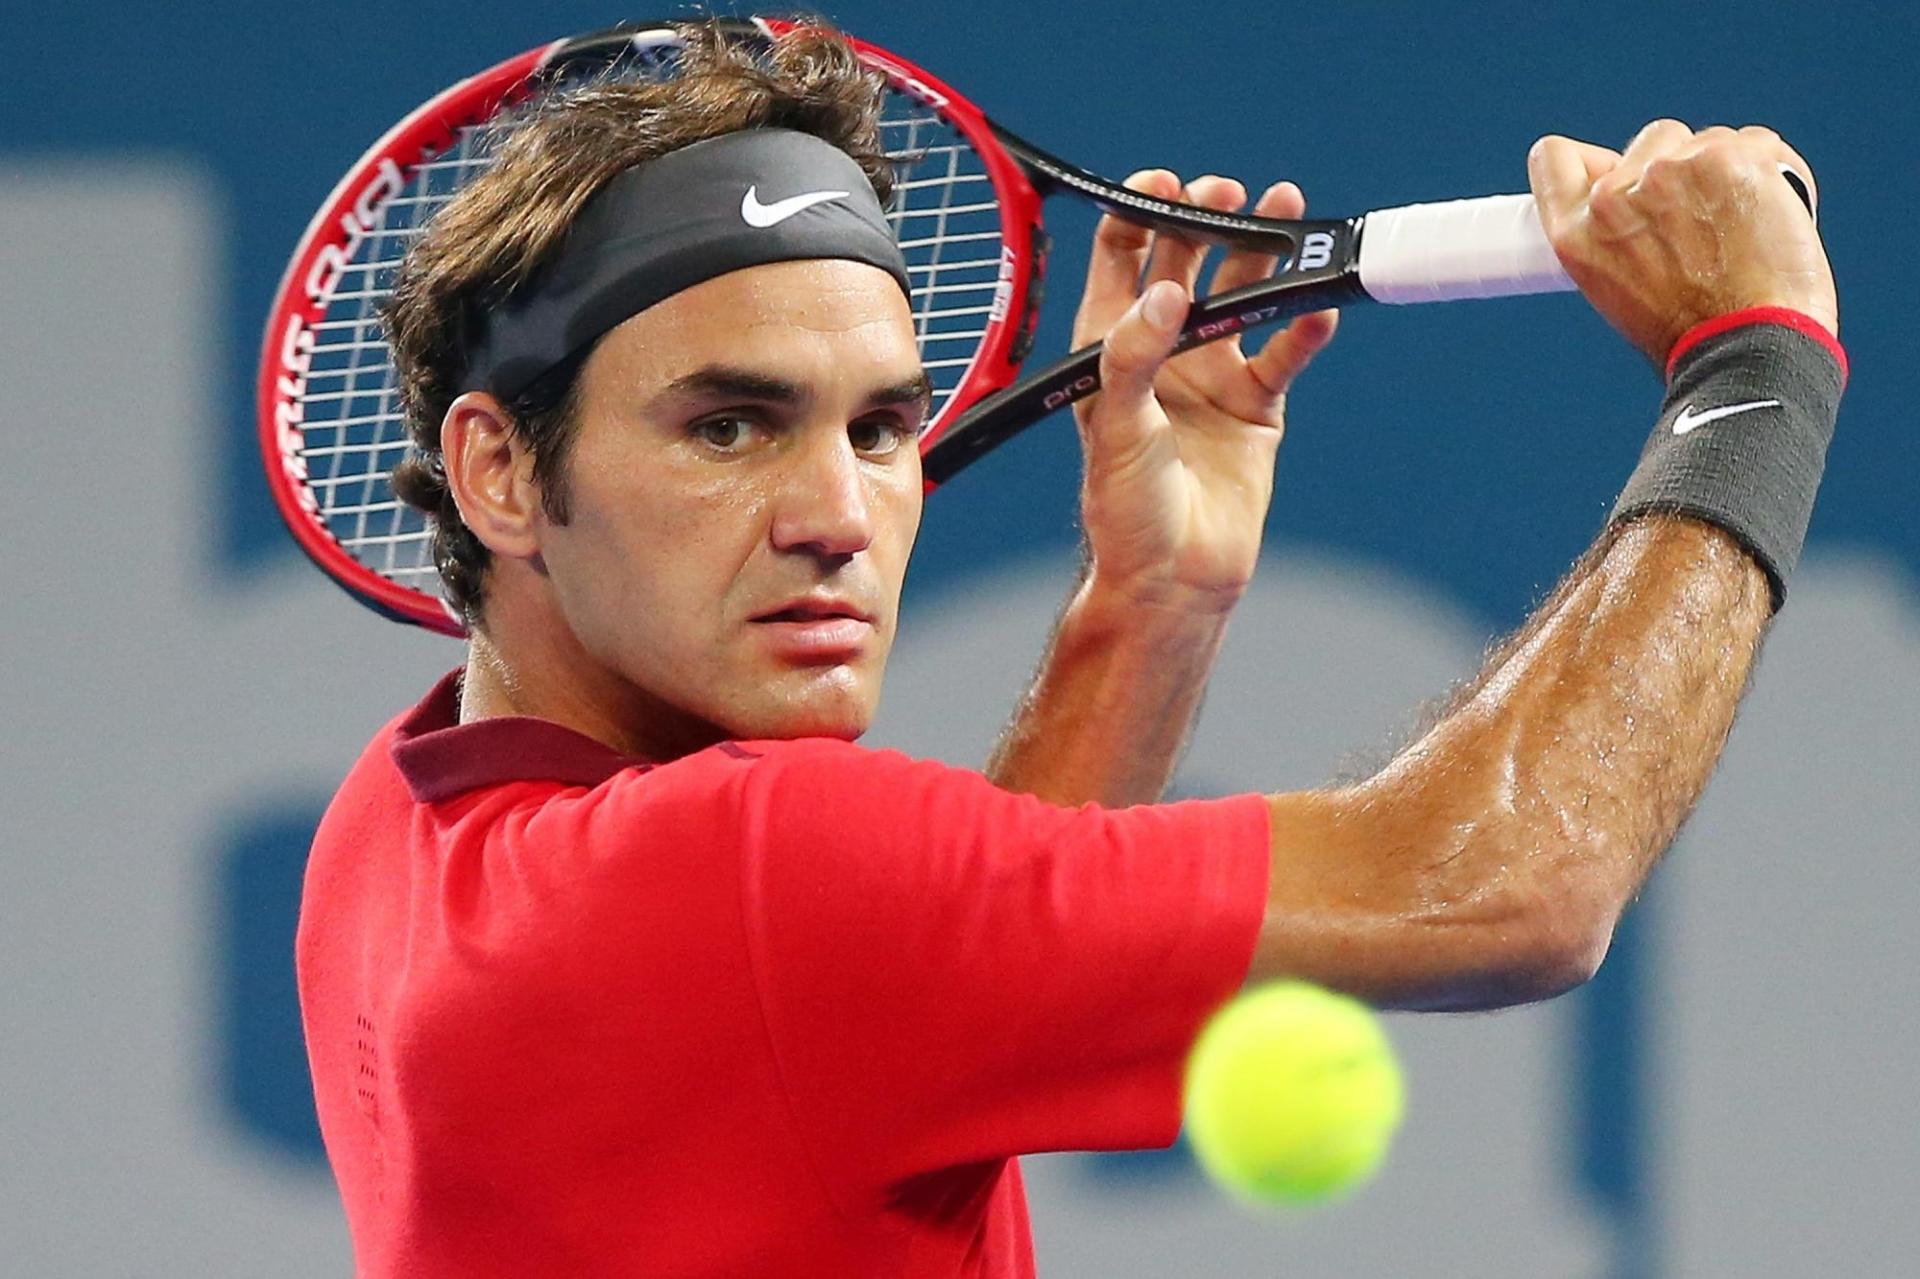 Roger Federer wins his 100th career title